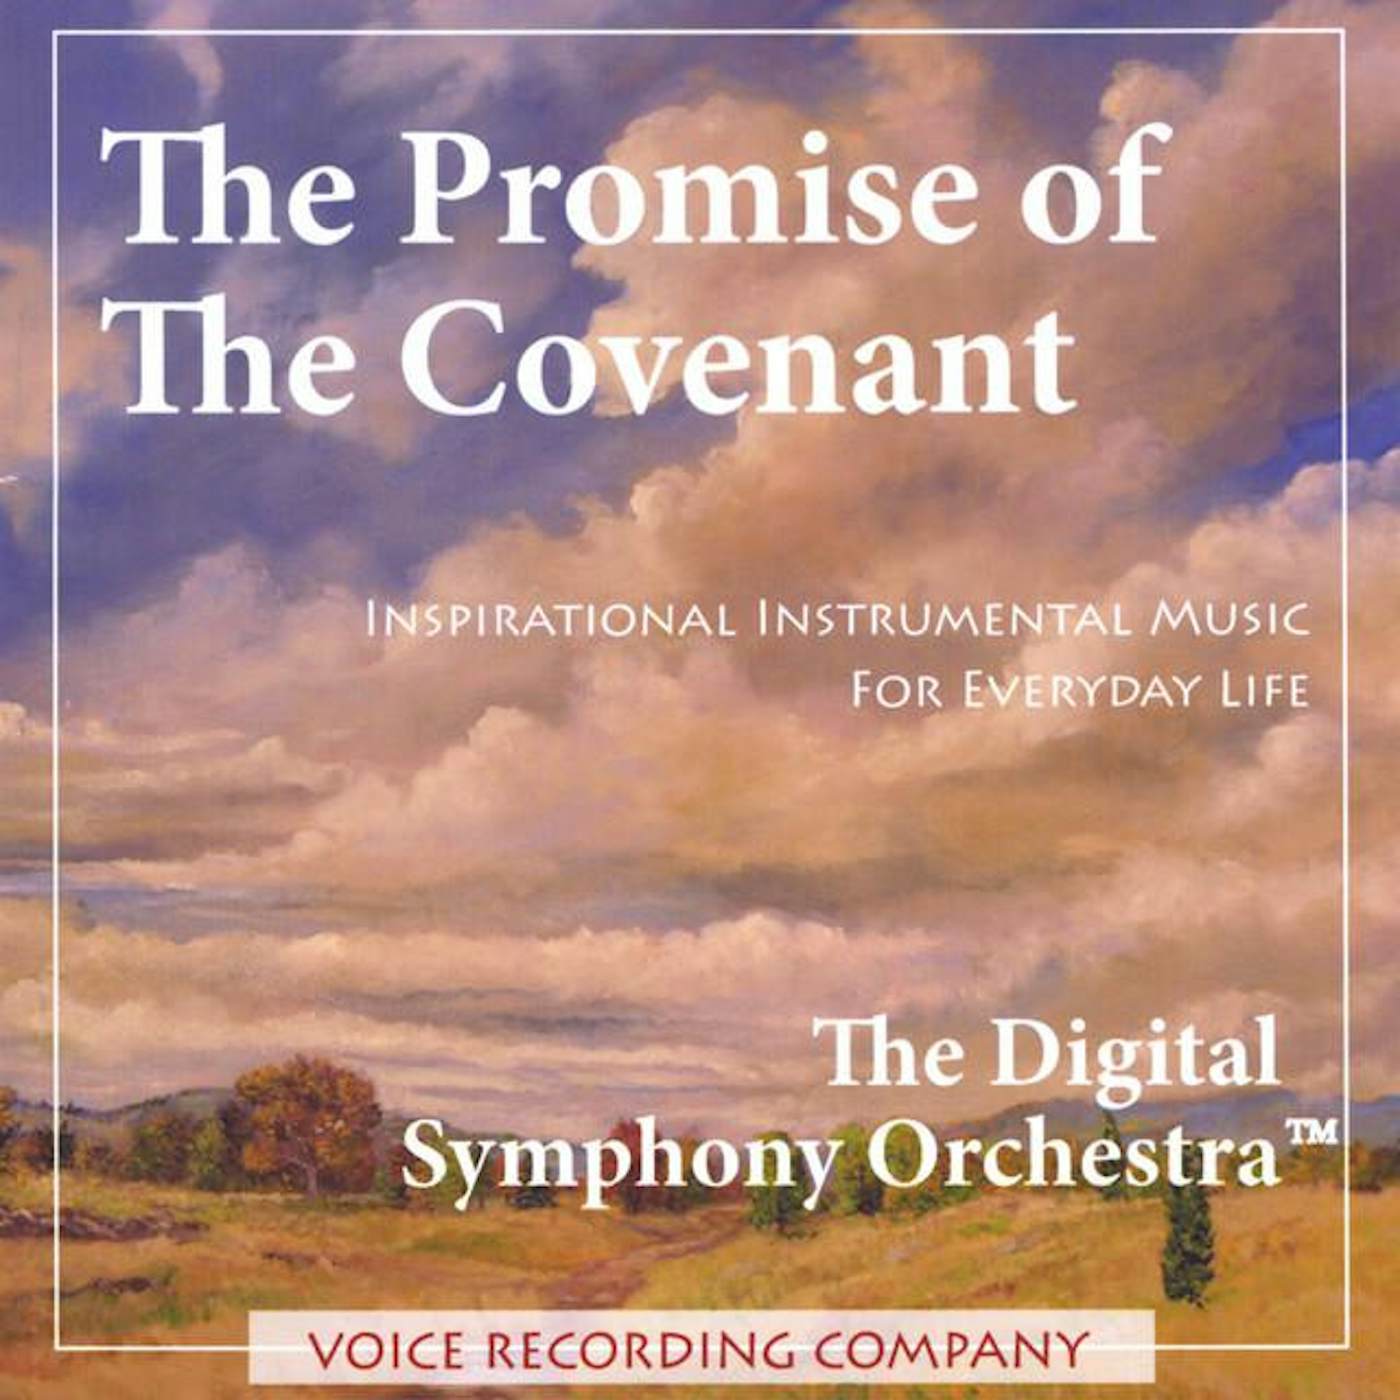 The Digital Symphony Orchestra